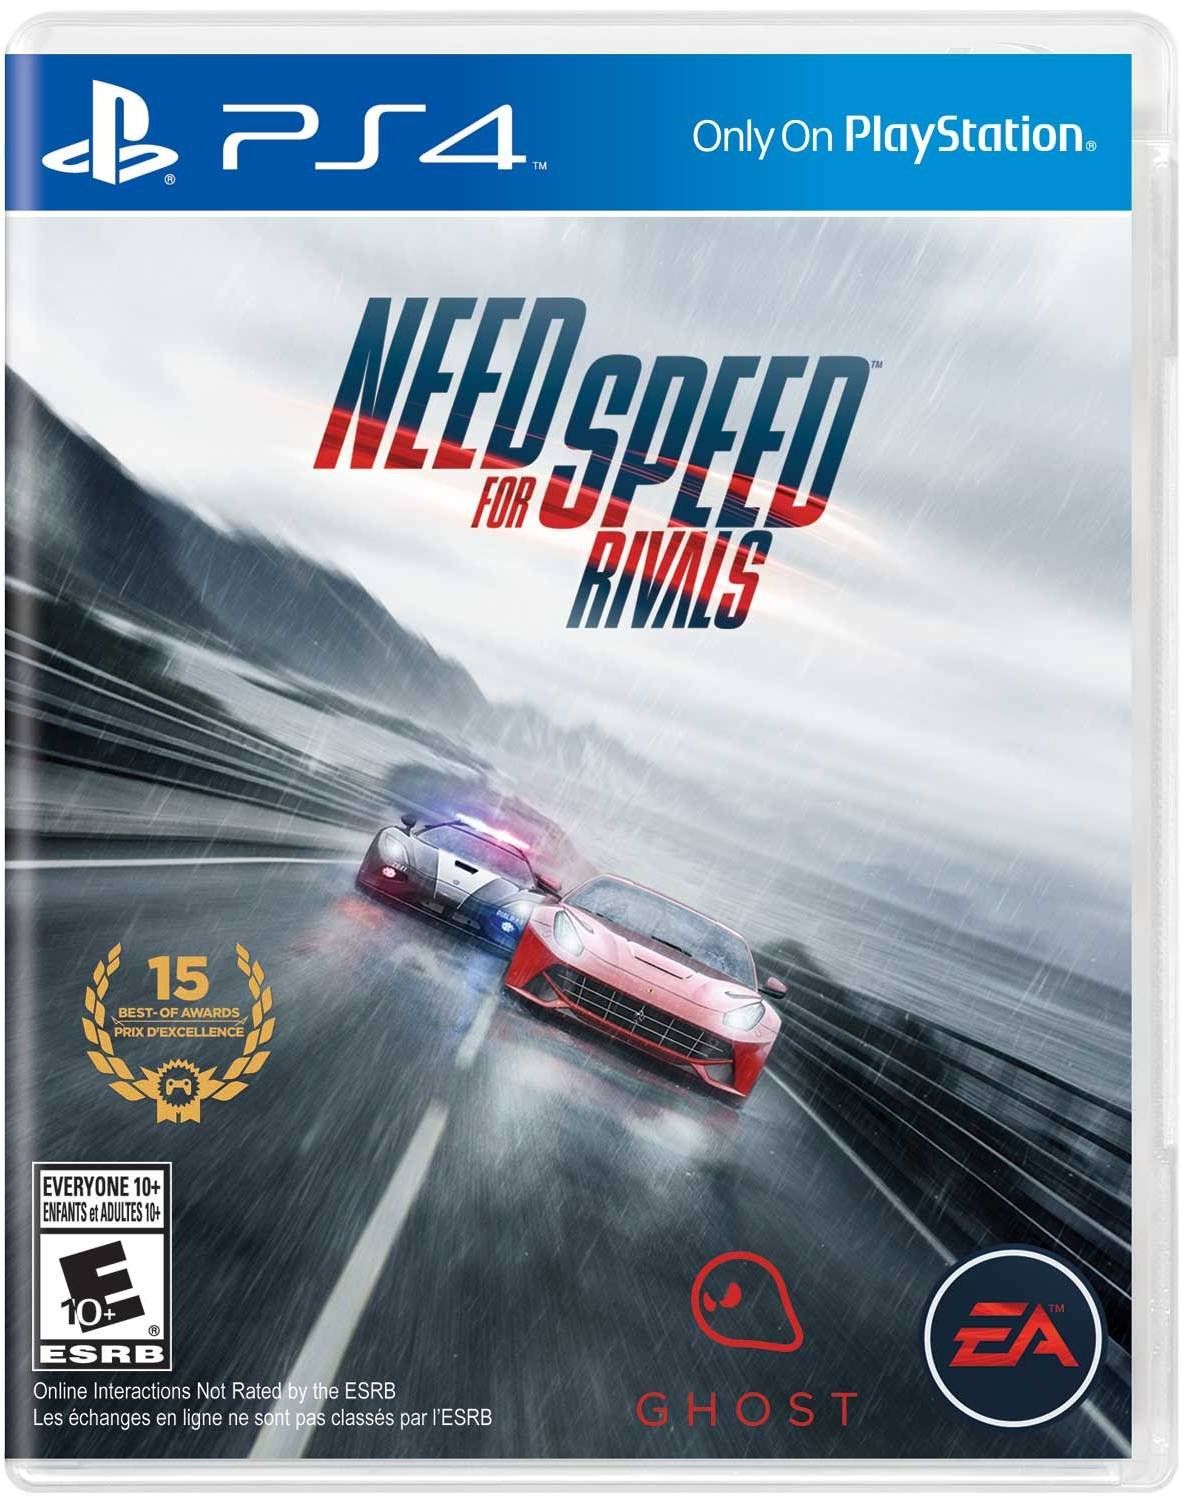 ps4 exclusive racing games